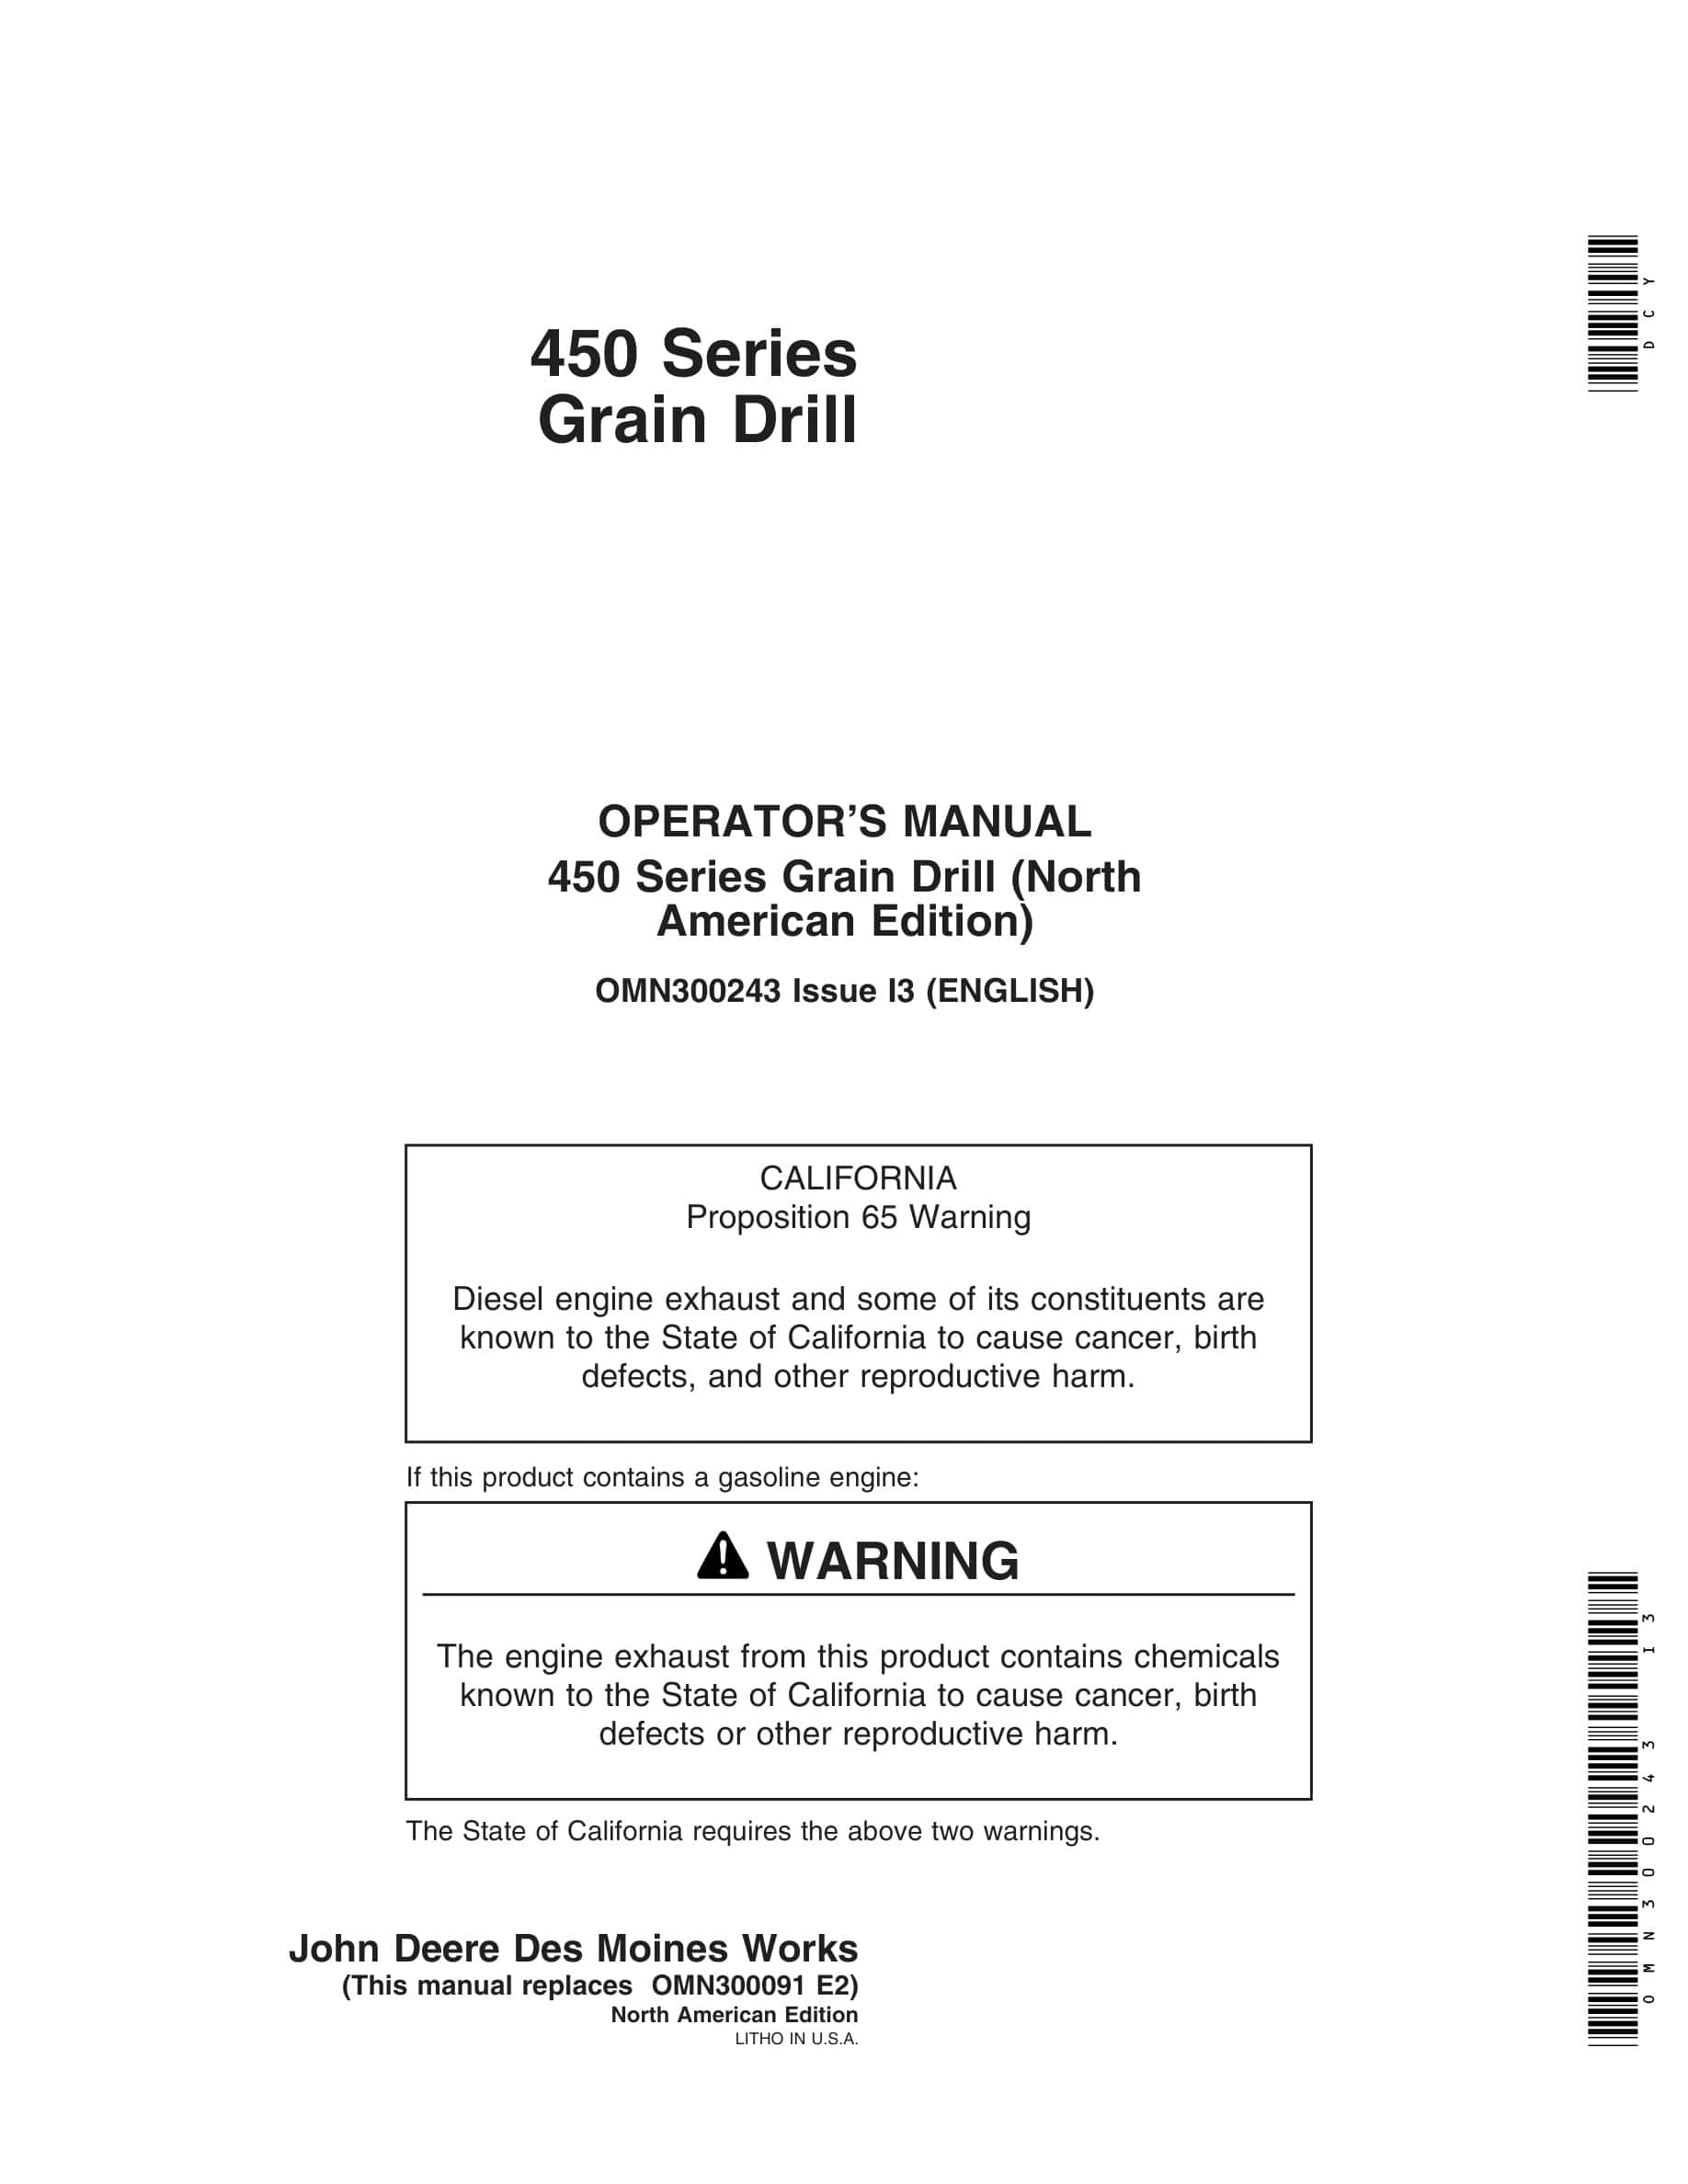 John Deere 450 Series Grain Drill Operator Manual OMN300243-1